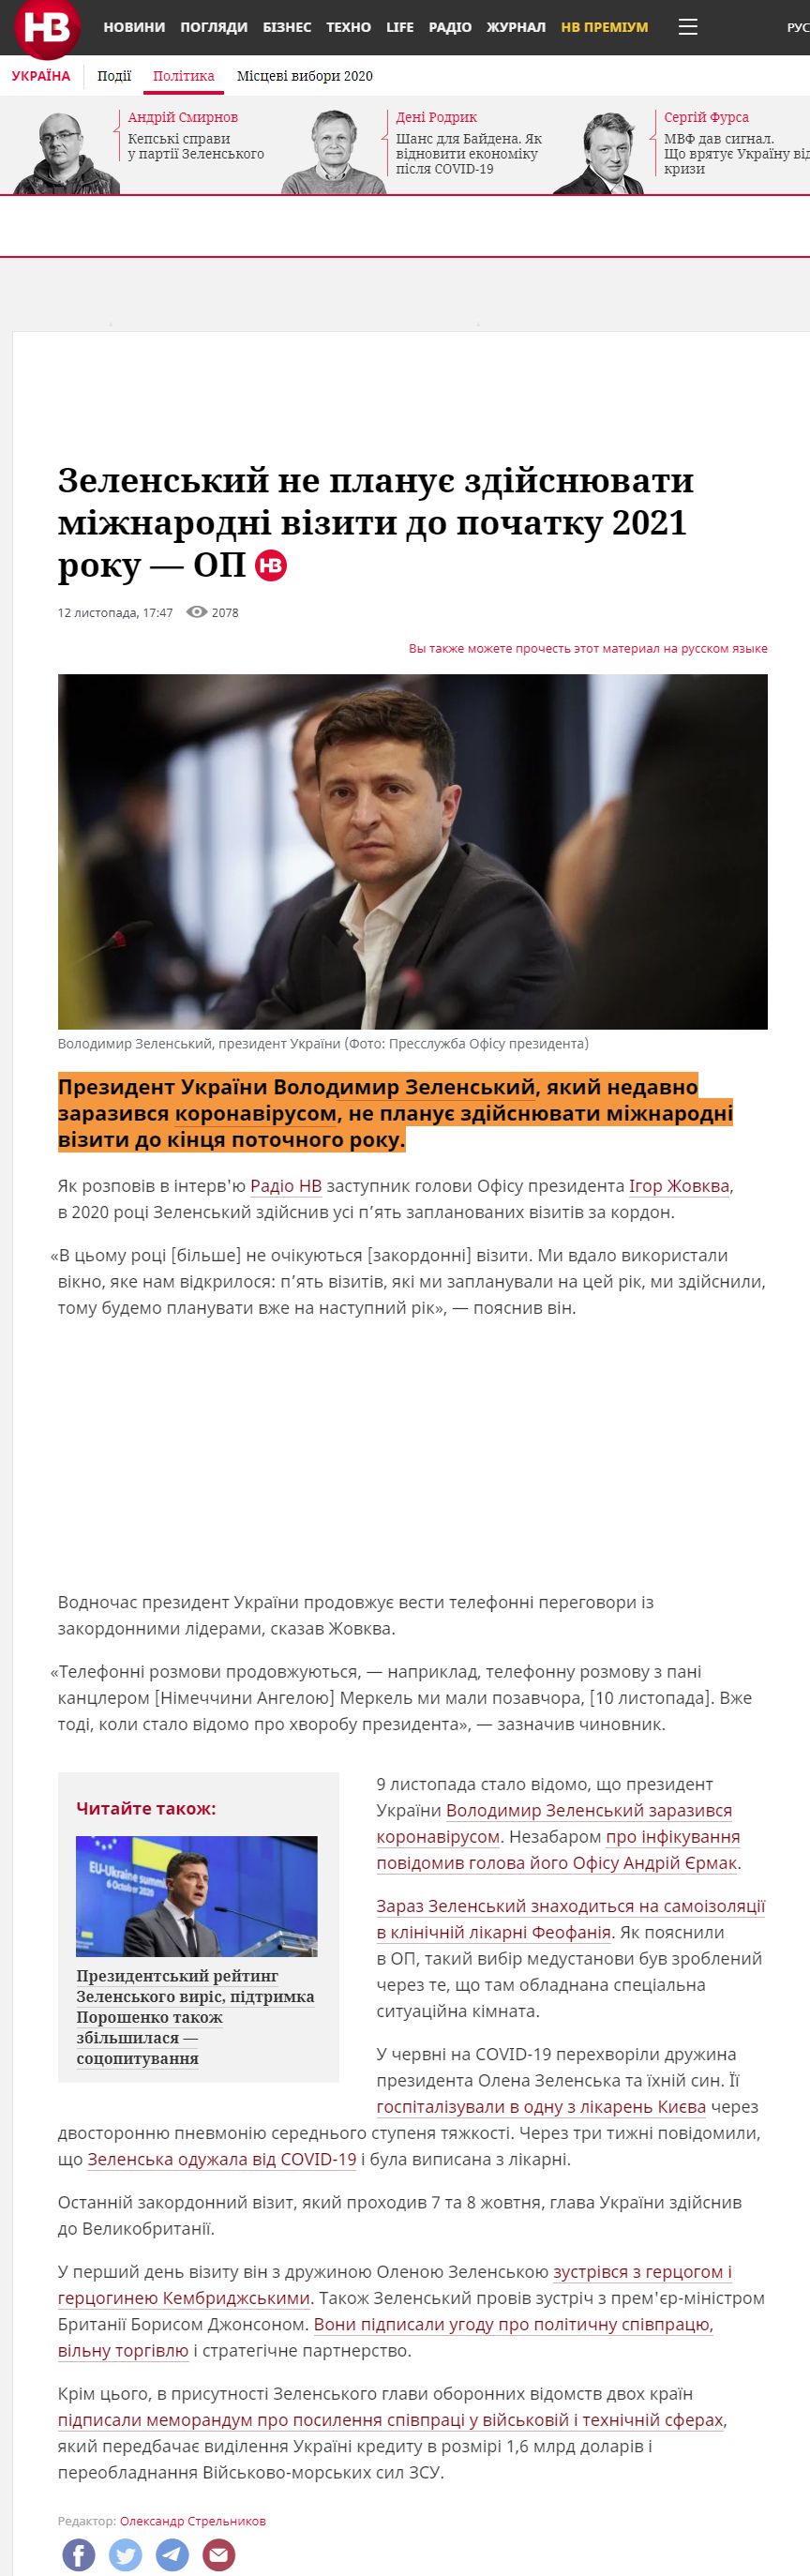 https://nv.ua/ukr/ukraine/politics/zelenskiy-ne-pojide-za-kordon-do-pochatku-2021-roku-ofis-prezidenta-novini-ukrajini-50123704.html